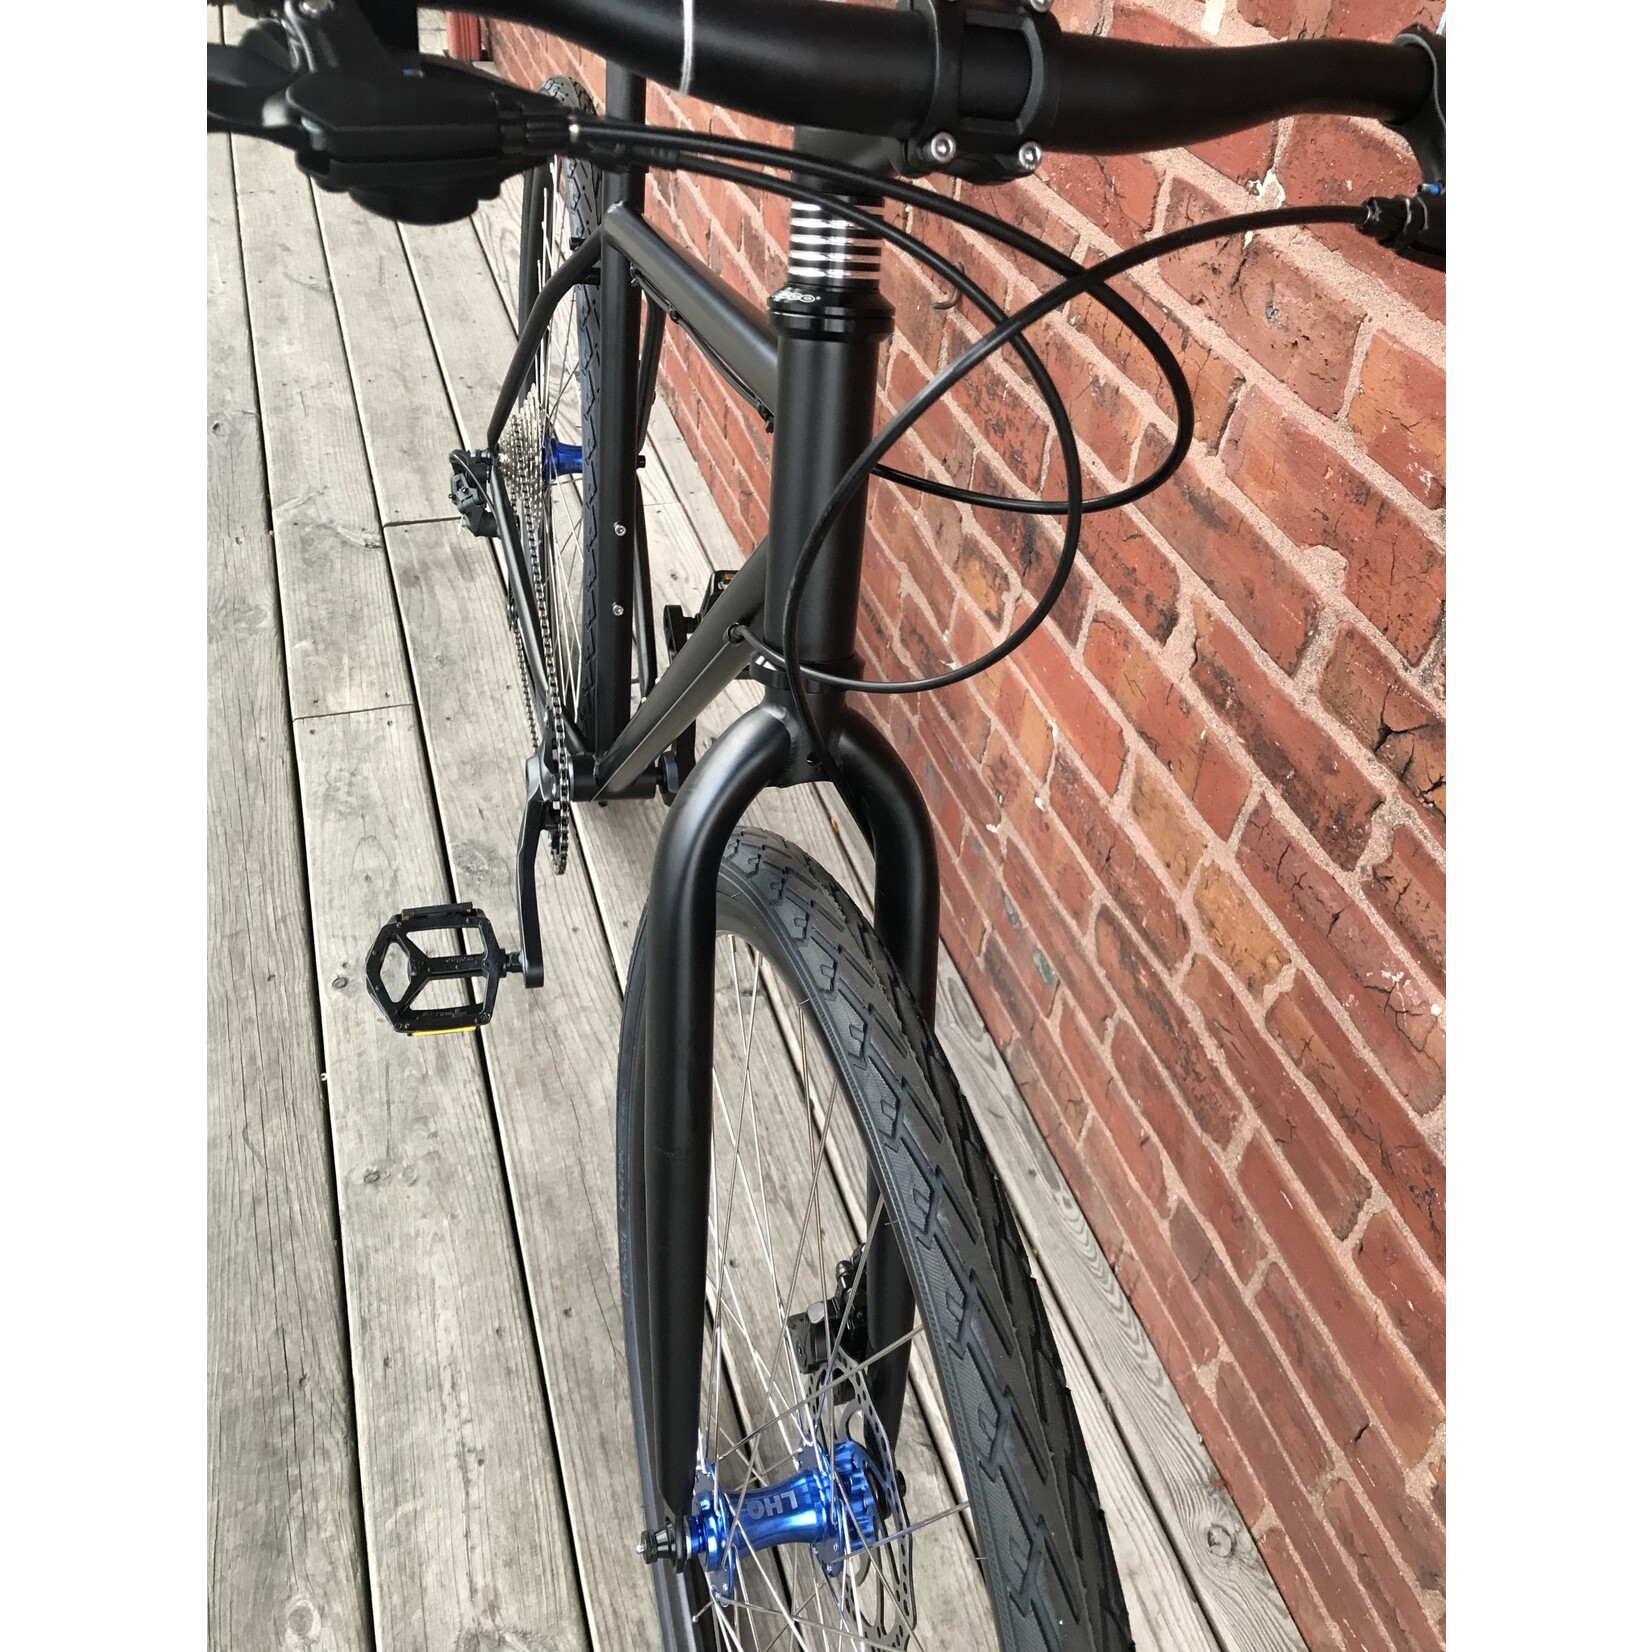 LHQ LHQ CX | MTB Disc Steel Frame Gravel Grinder Bicycle